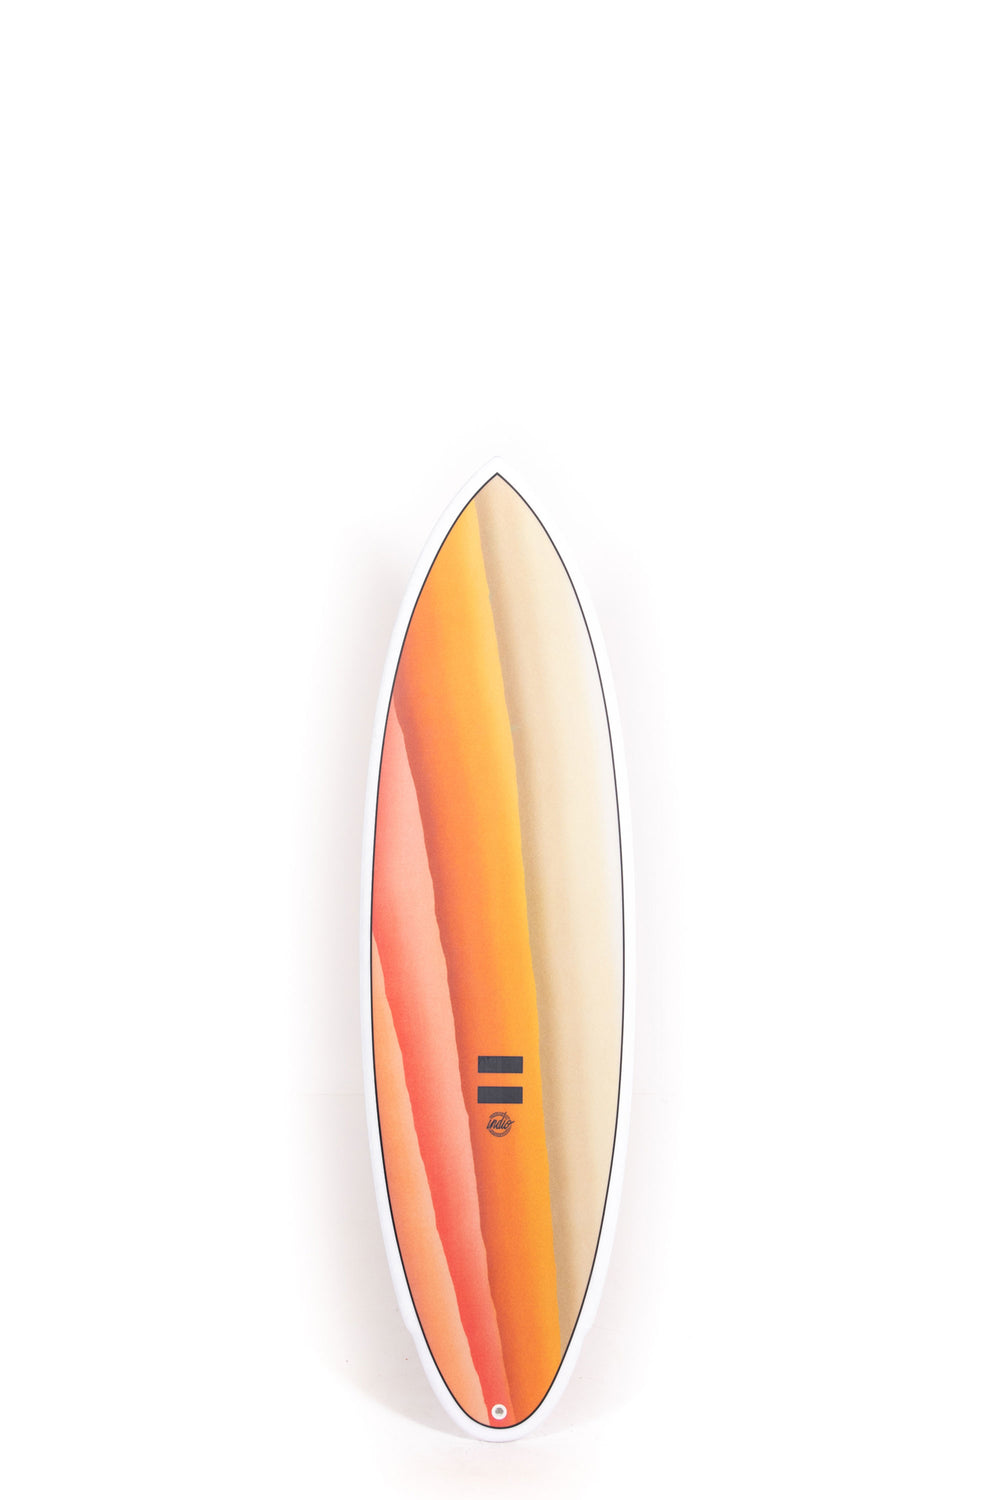 Pukas Surf Shop Indio Surfboards Rancho India Gold 6'2